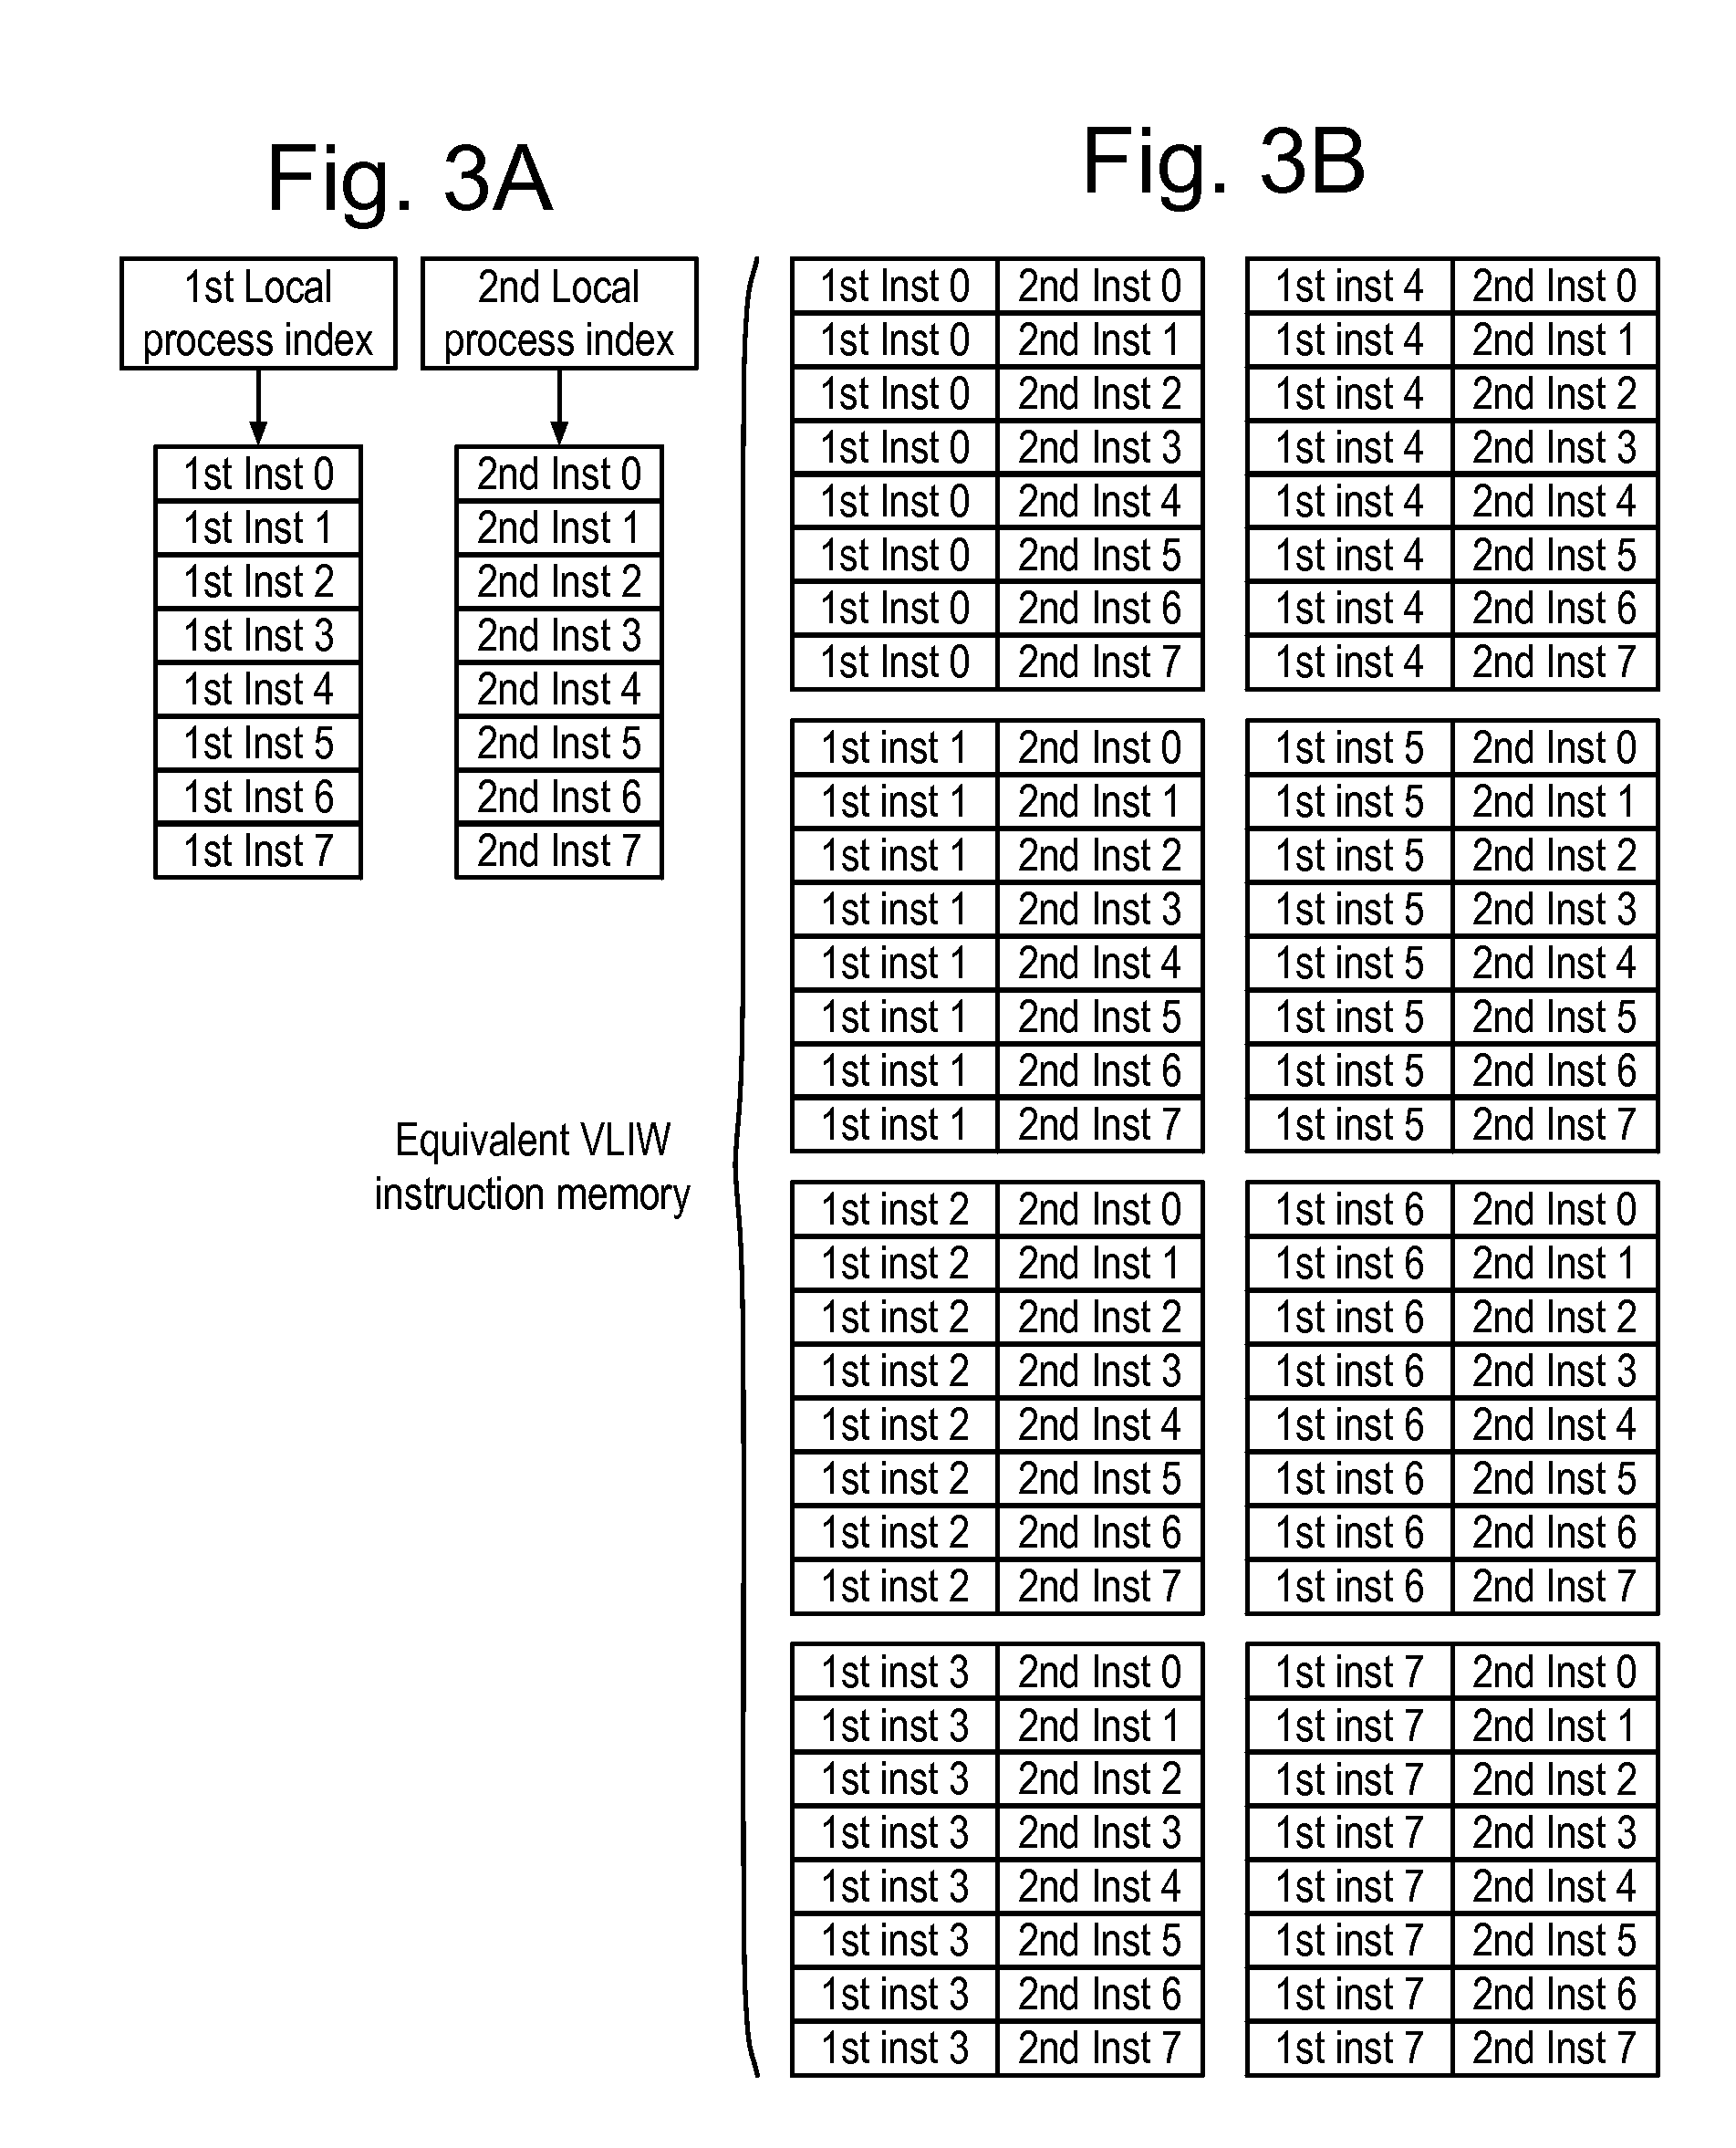 Computer for amdahl-compliant algorithms like matrix inversion